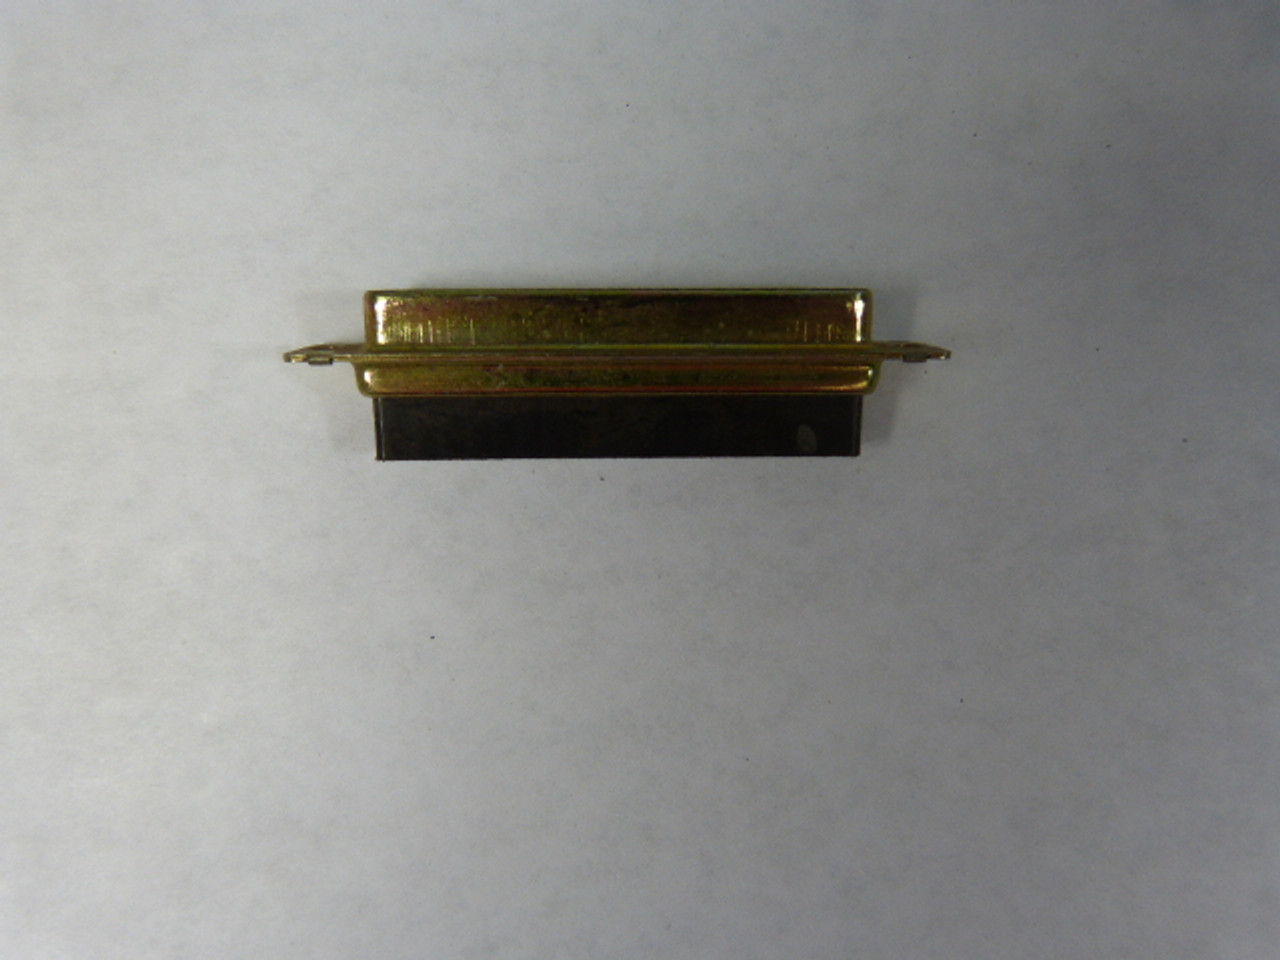 Amphenol 205209-1 Connector D-Sub USED